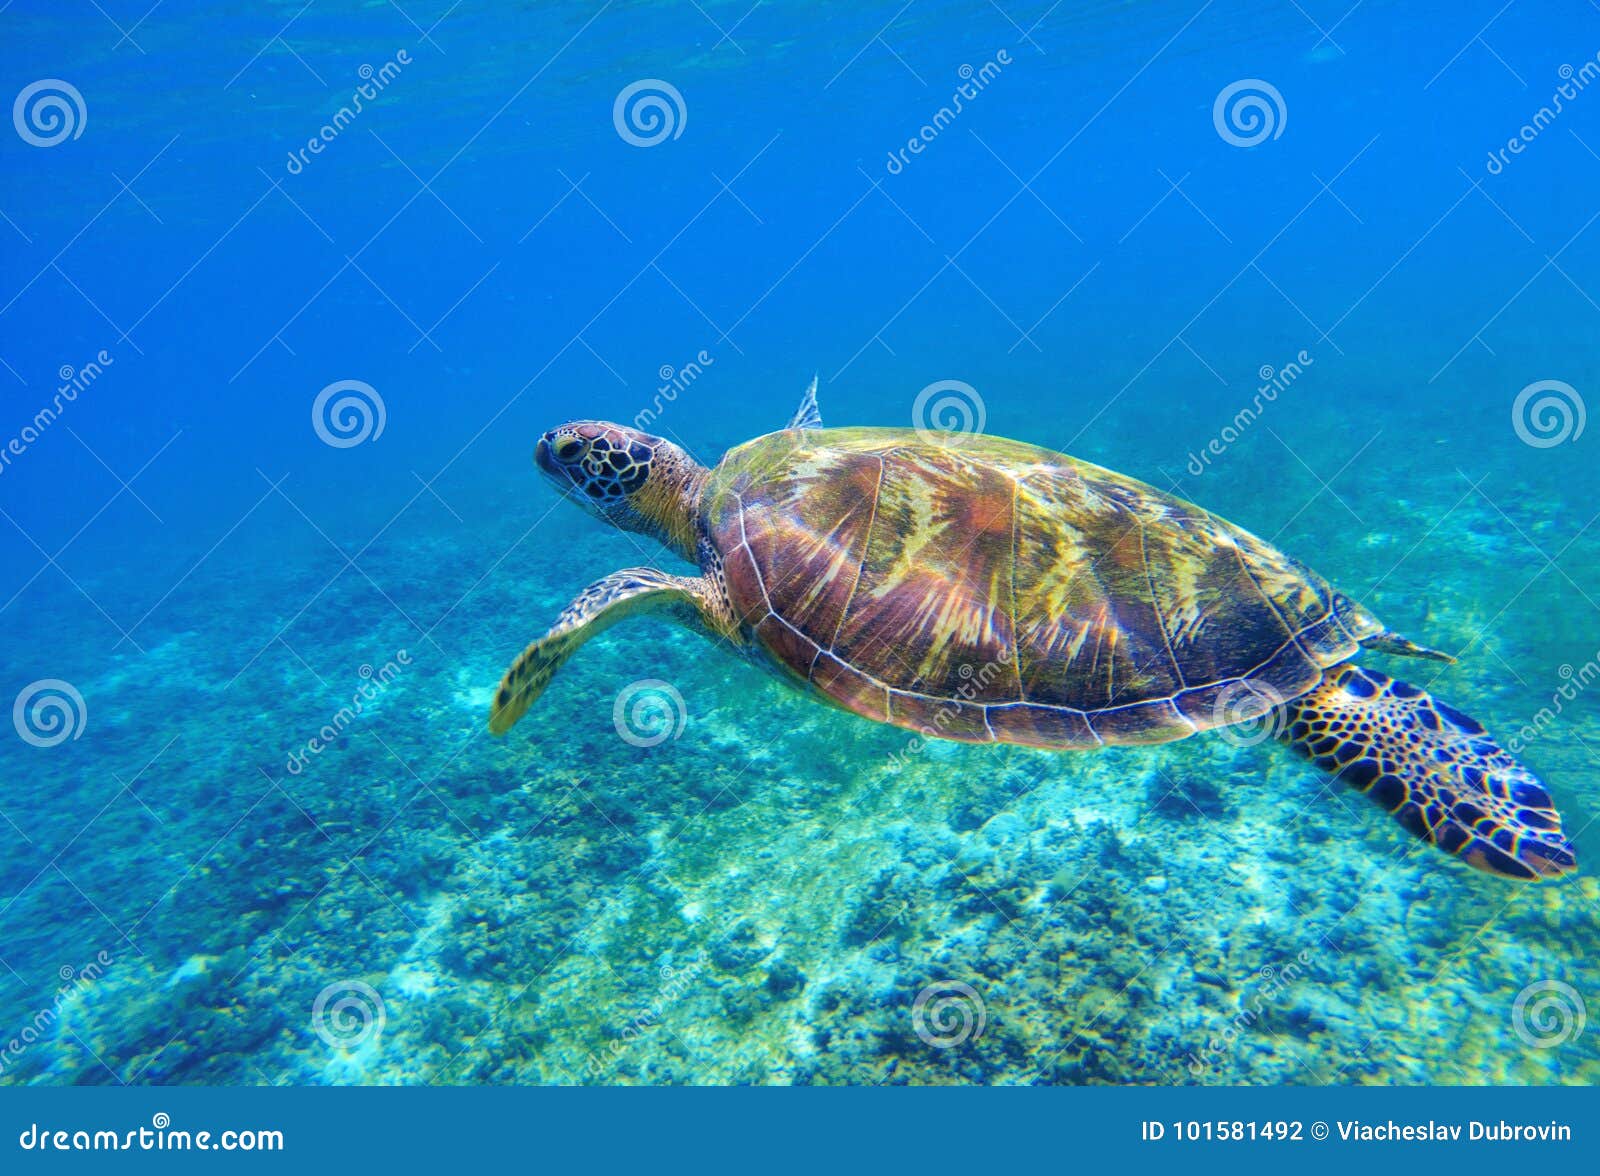 Green Sea Turtle in Seawater. Sea Tortoise Underwater Photo. Sea Animal in  Coral Reef Stock Photo - Image of dive, paradise: 101581492